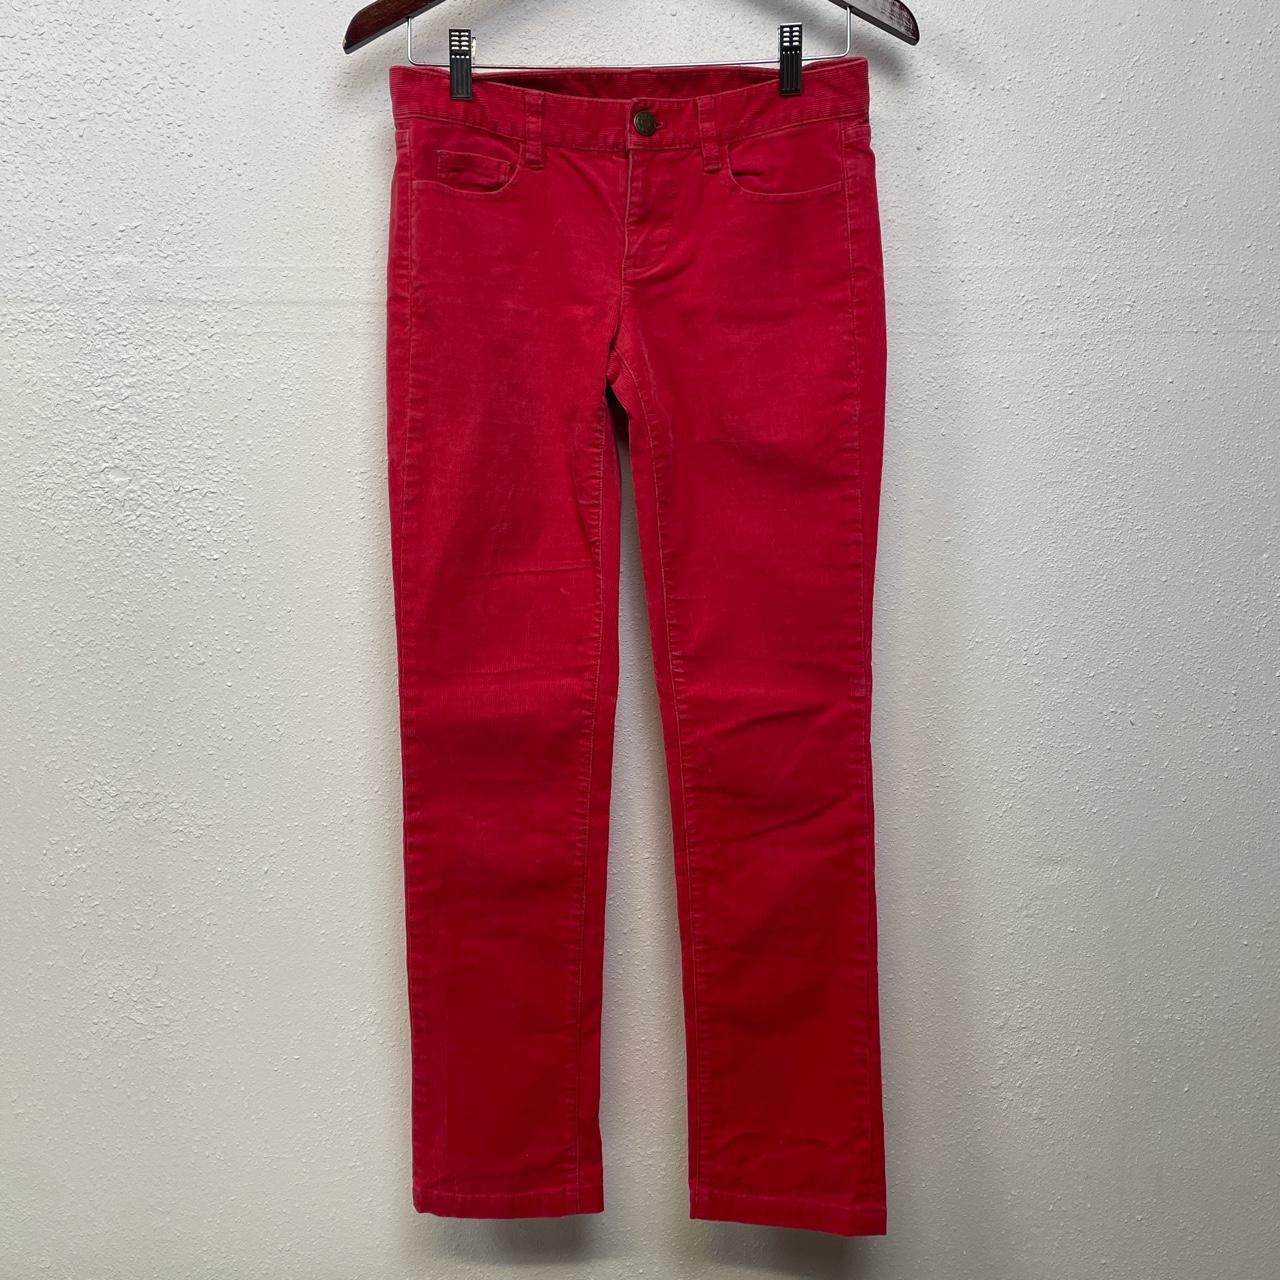 J.Crew Women's Red Jeans